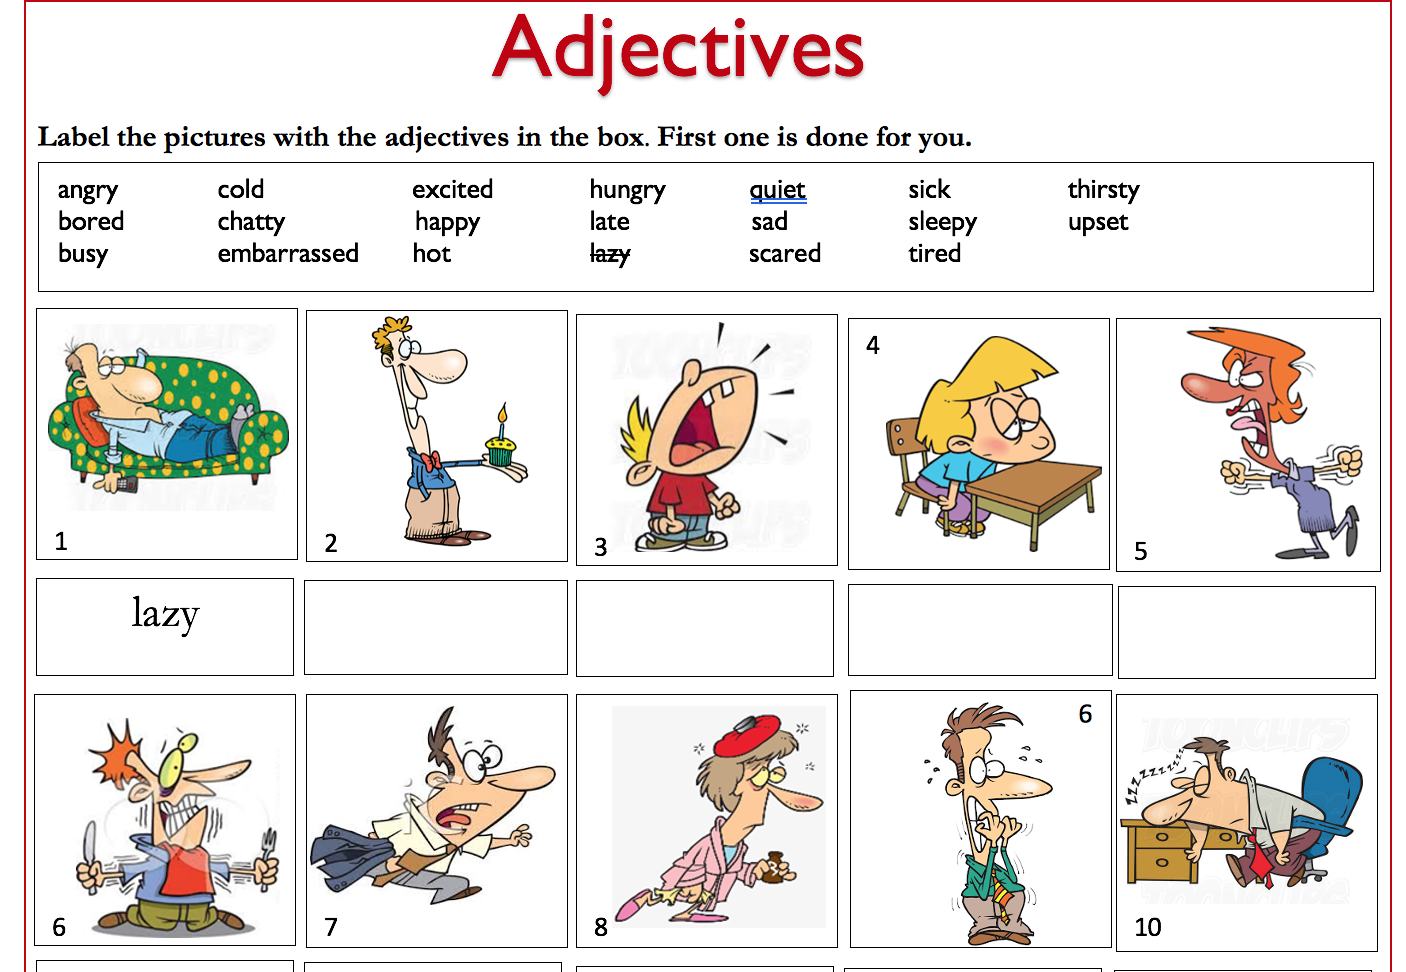 homework for adjectives